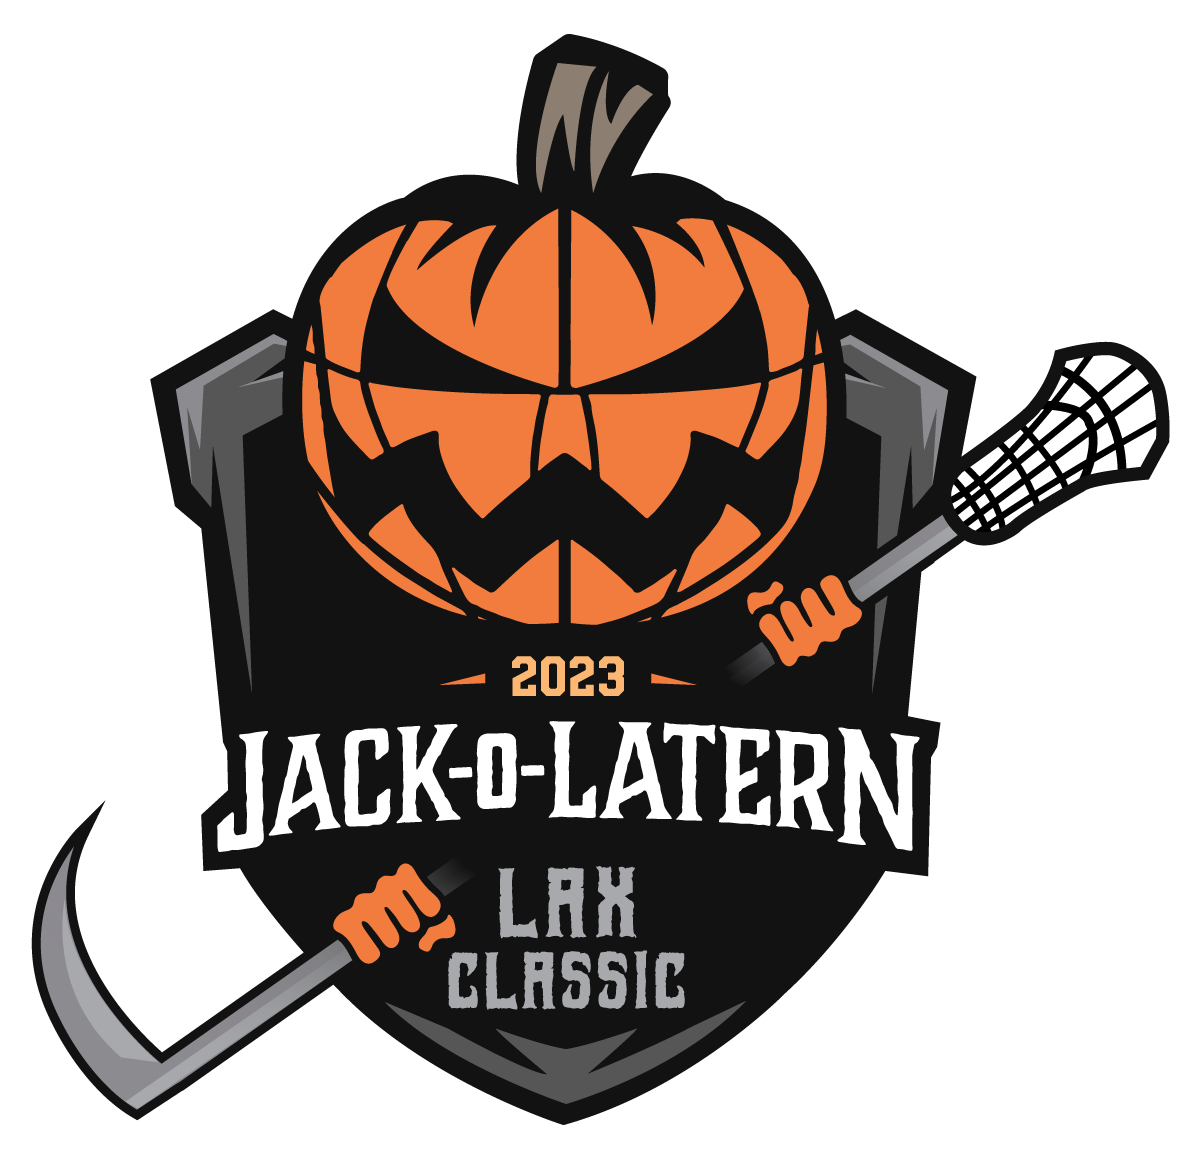 Jack-O-Lantern Lax Classic logo